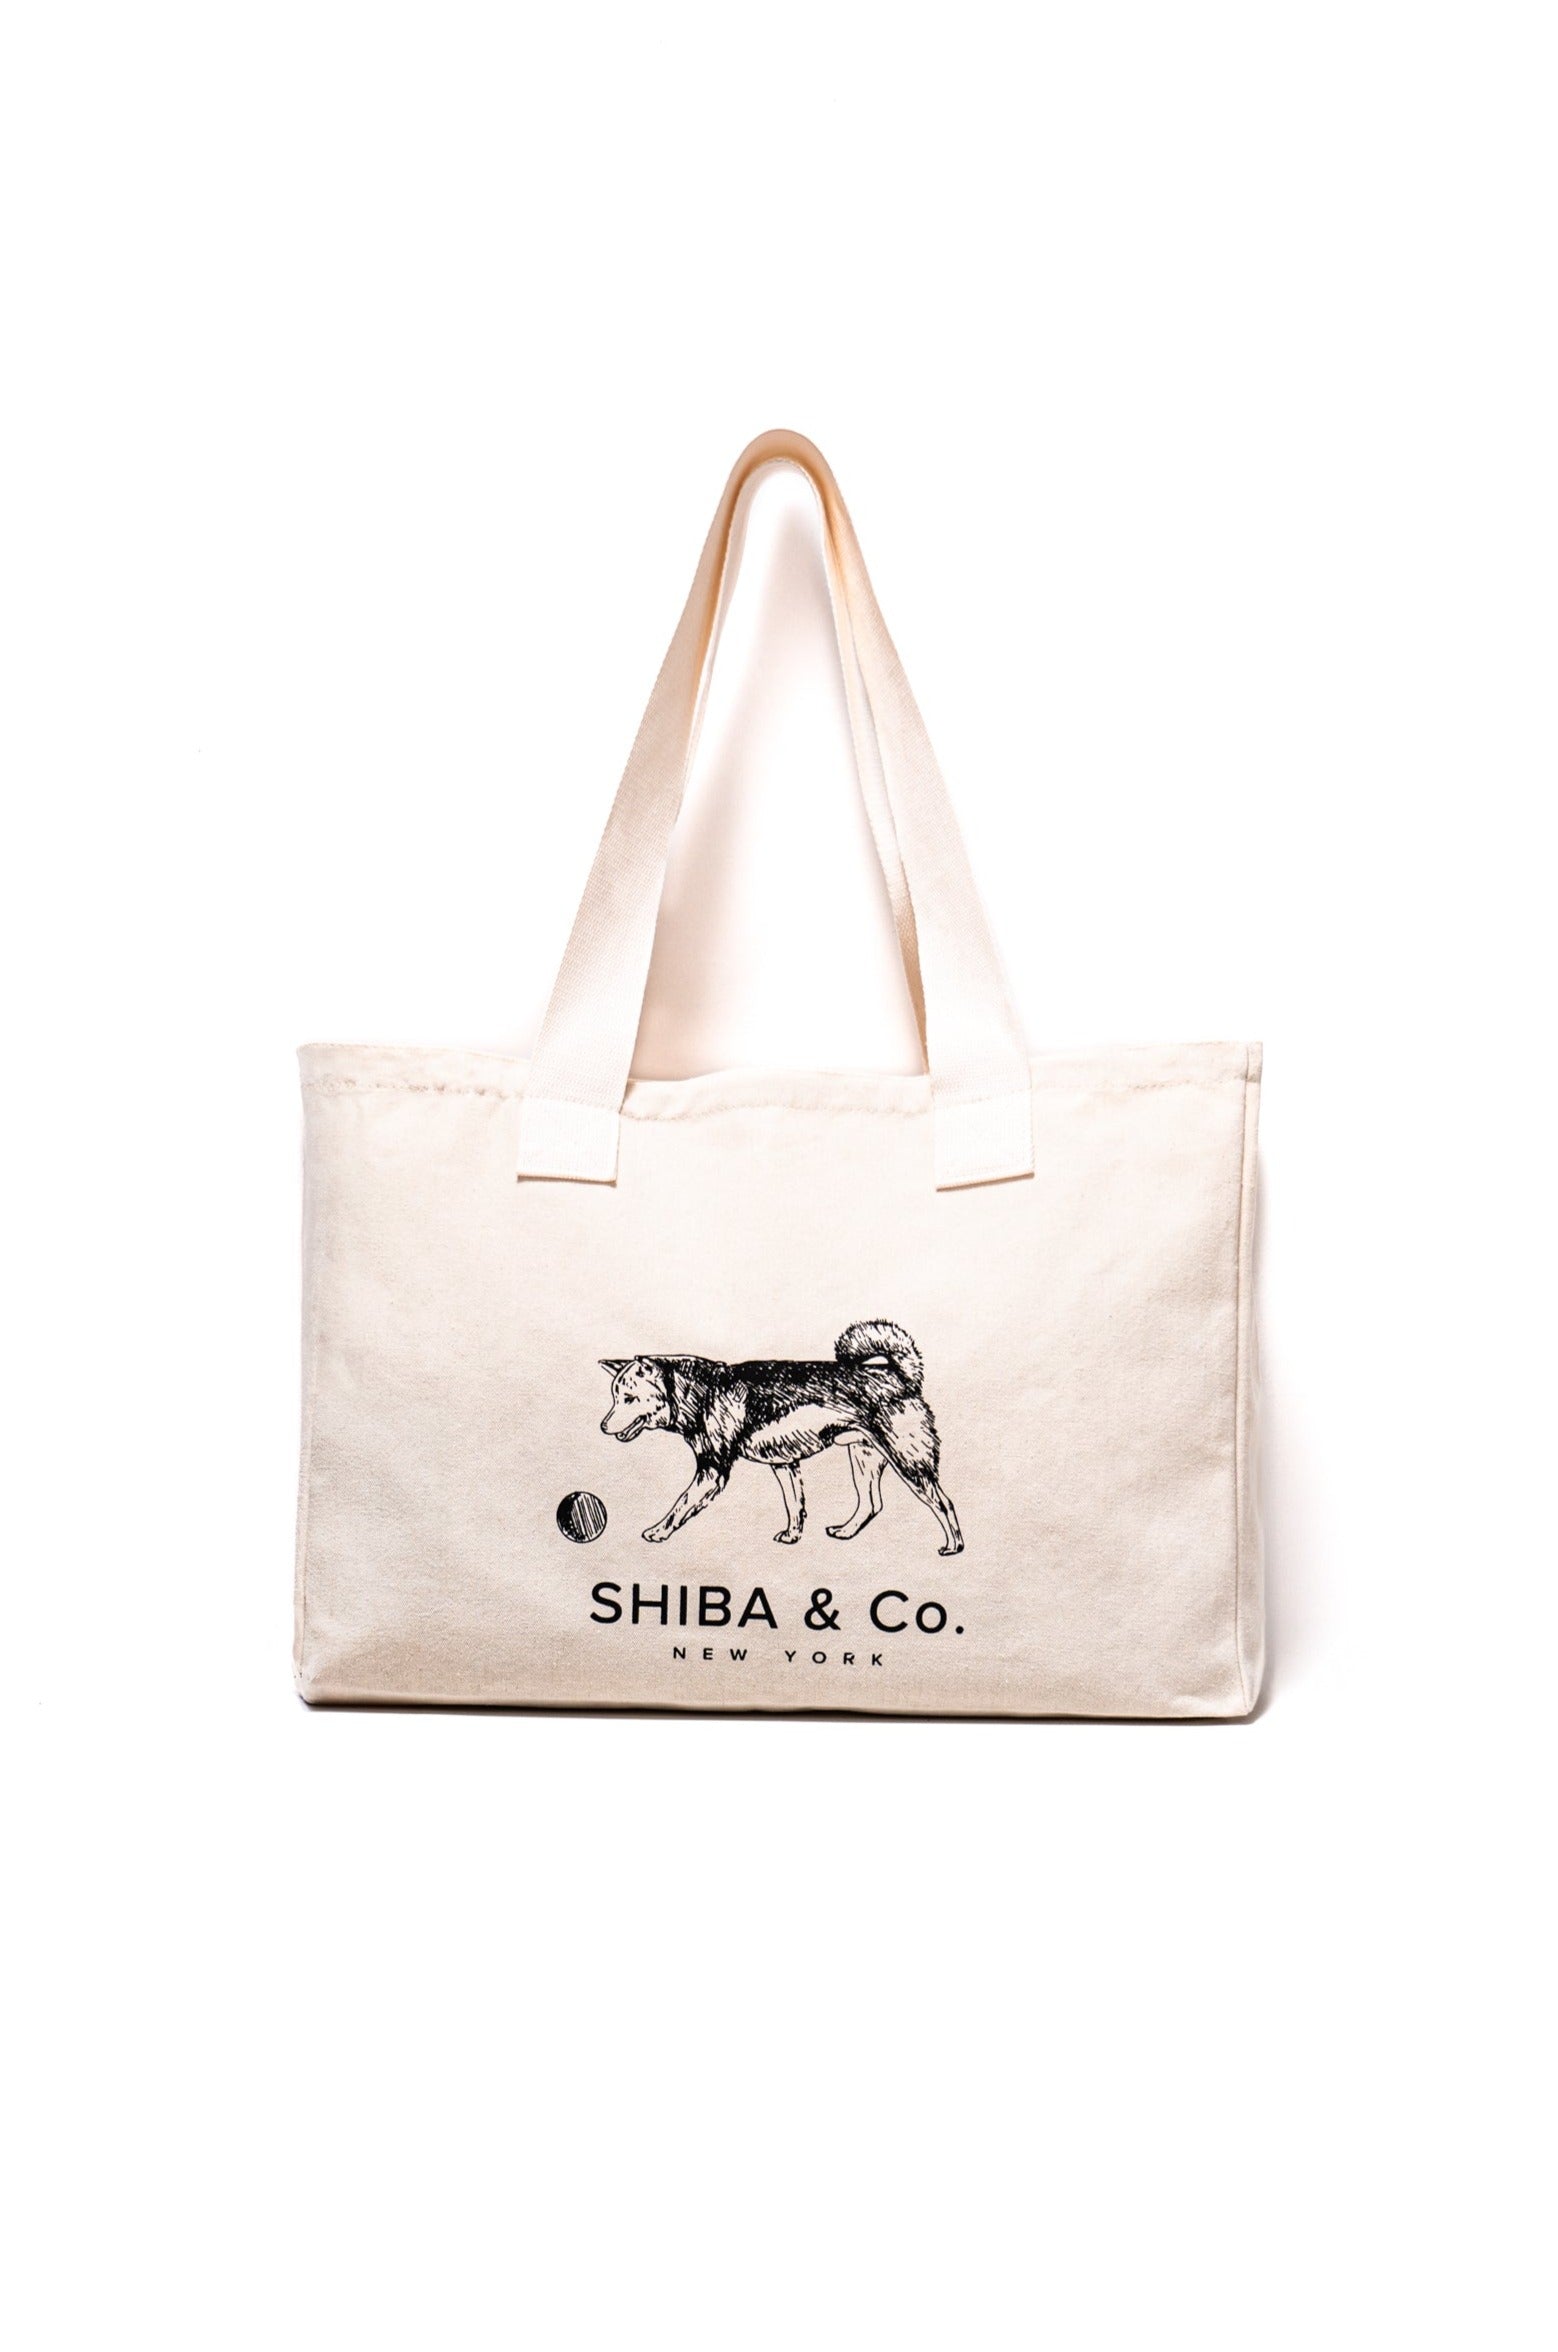 Shop All | SHIBA & CO.